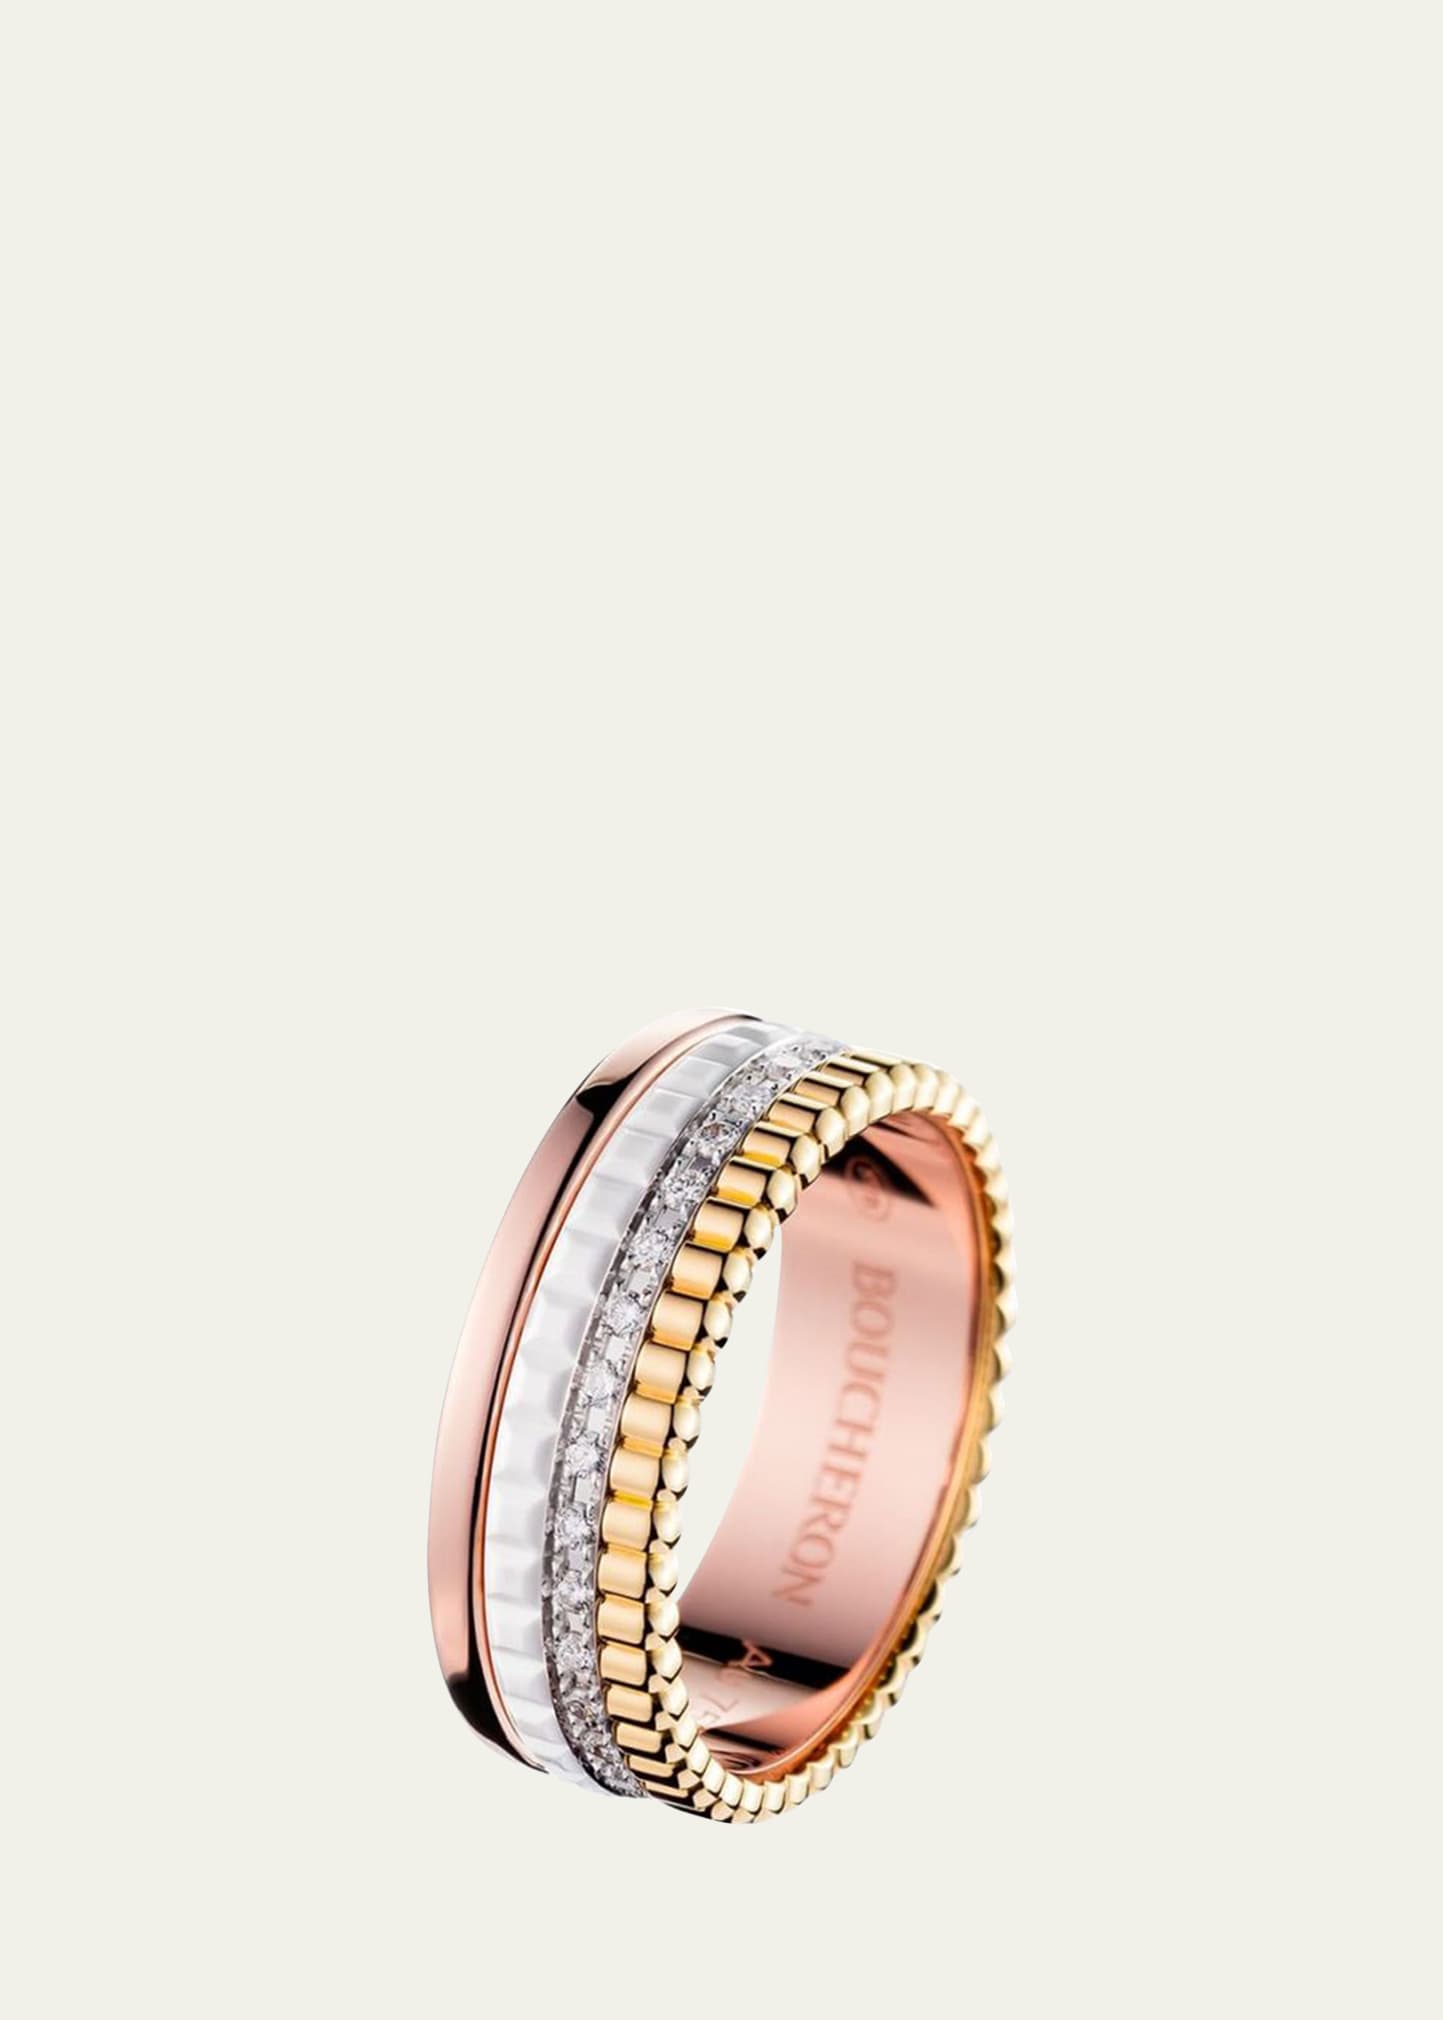 Quatre Small Ring in Tricolor Gold with White Ceramic and Diamonds